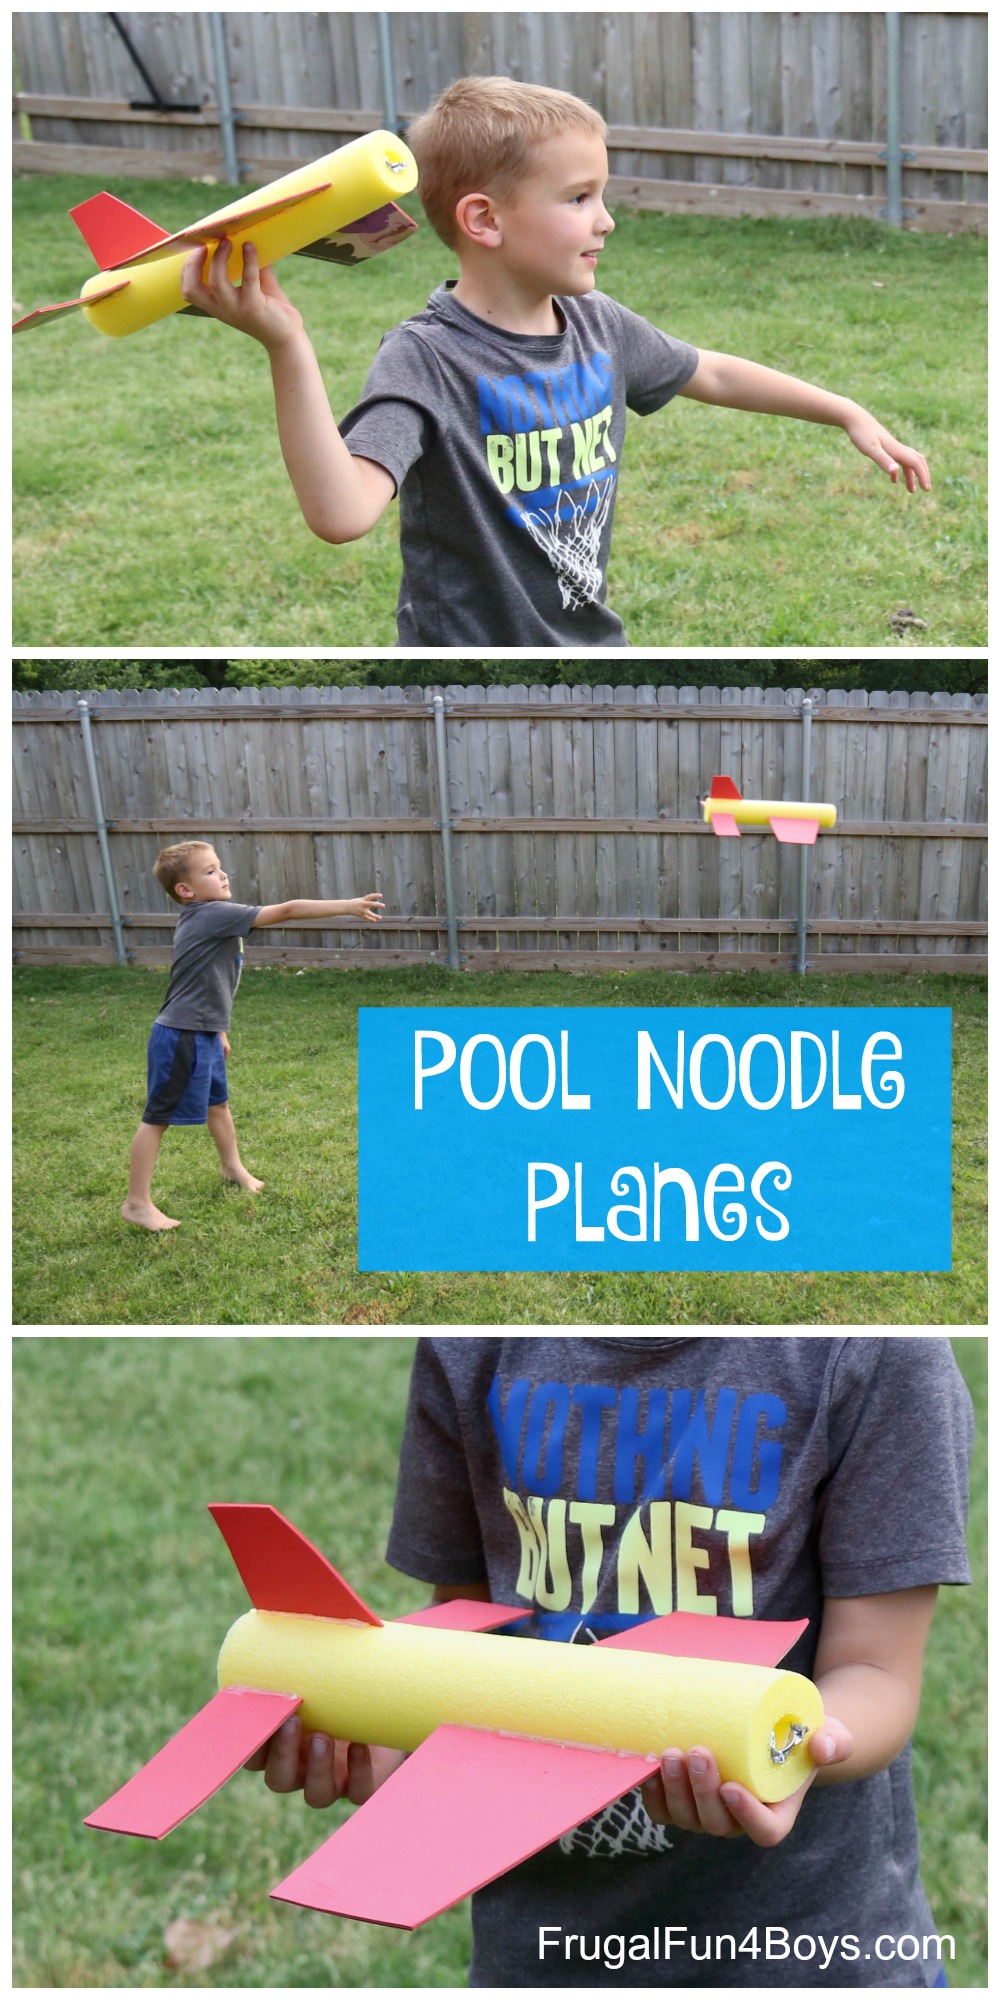 Pool-Noodle-Planes-Pin-2.jpg